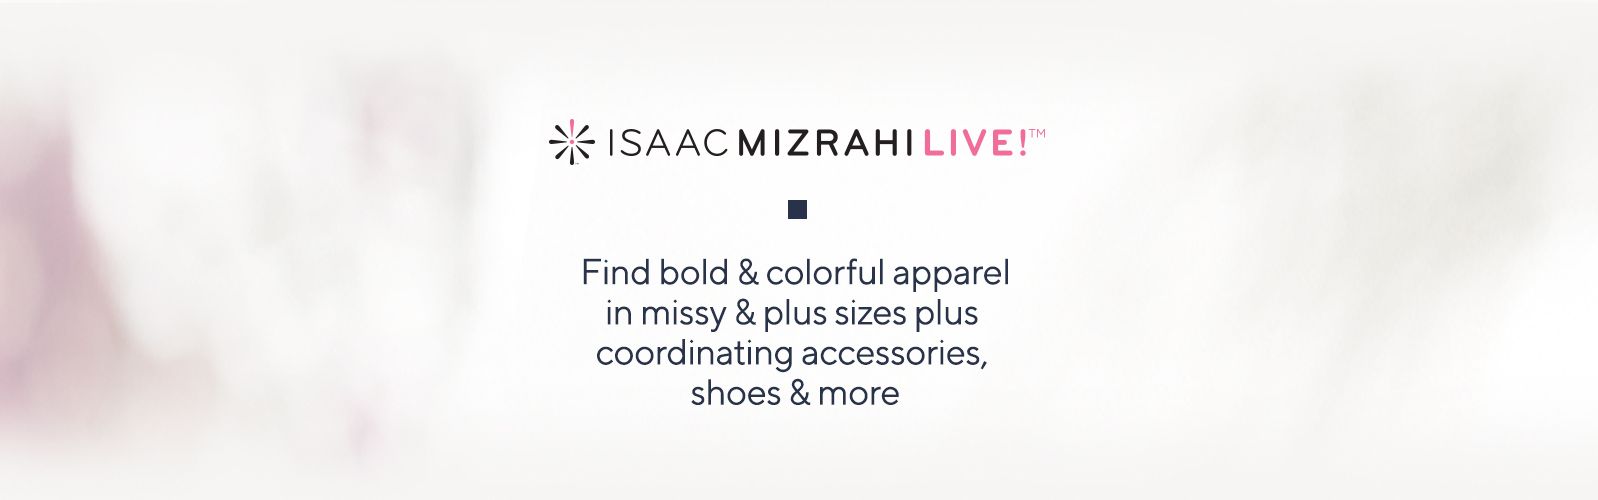 Isaac Mizrahi Live Size Chart